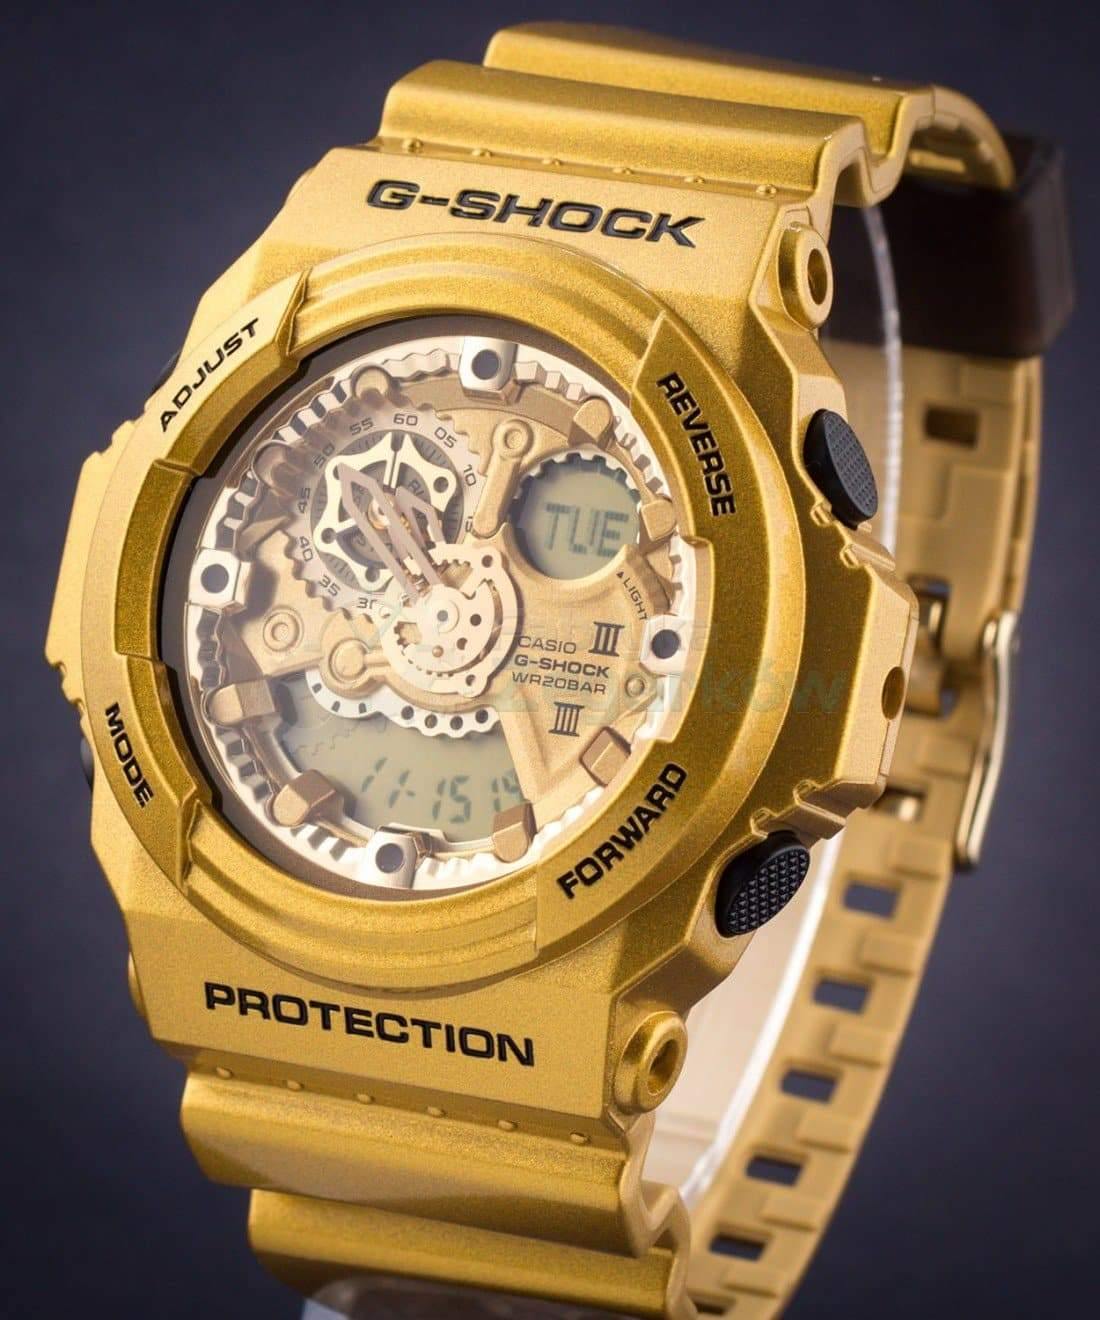 Casio G-Shock Crazy Gold Series Analog-Digital ALL Gold Watch GA300GD-9AER - Diligence1International